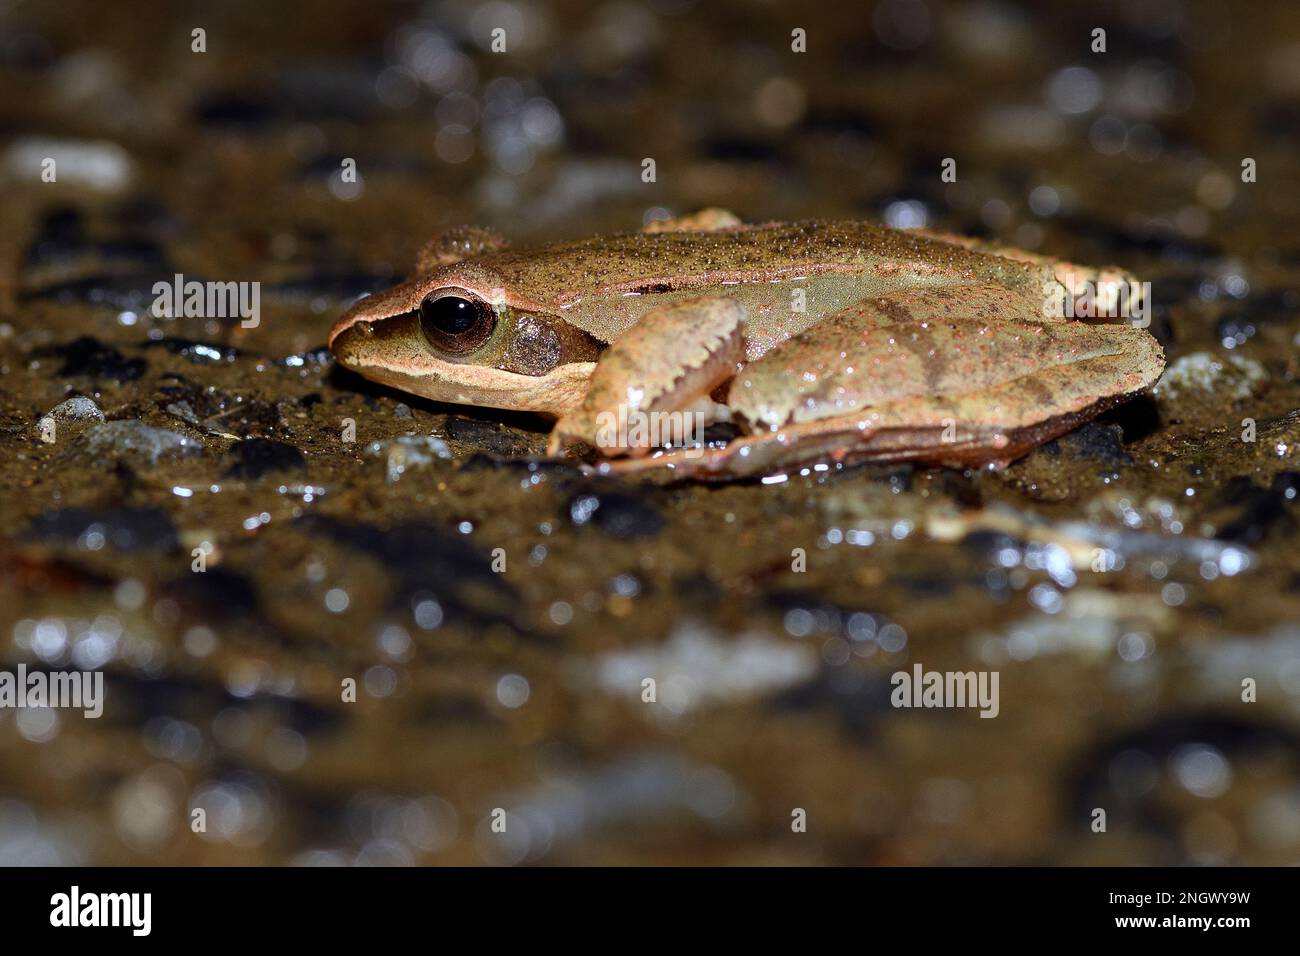 Ryukyu brown frog (Rana kobai) from Amami Oshima, southern Japan. Stock Photo